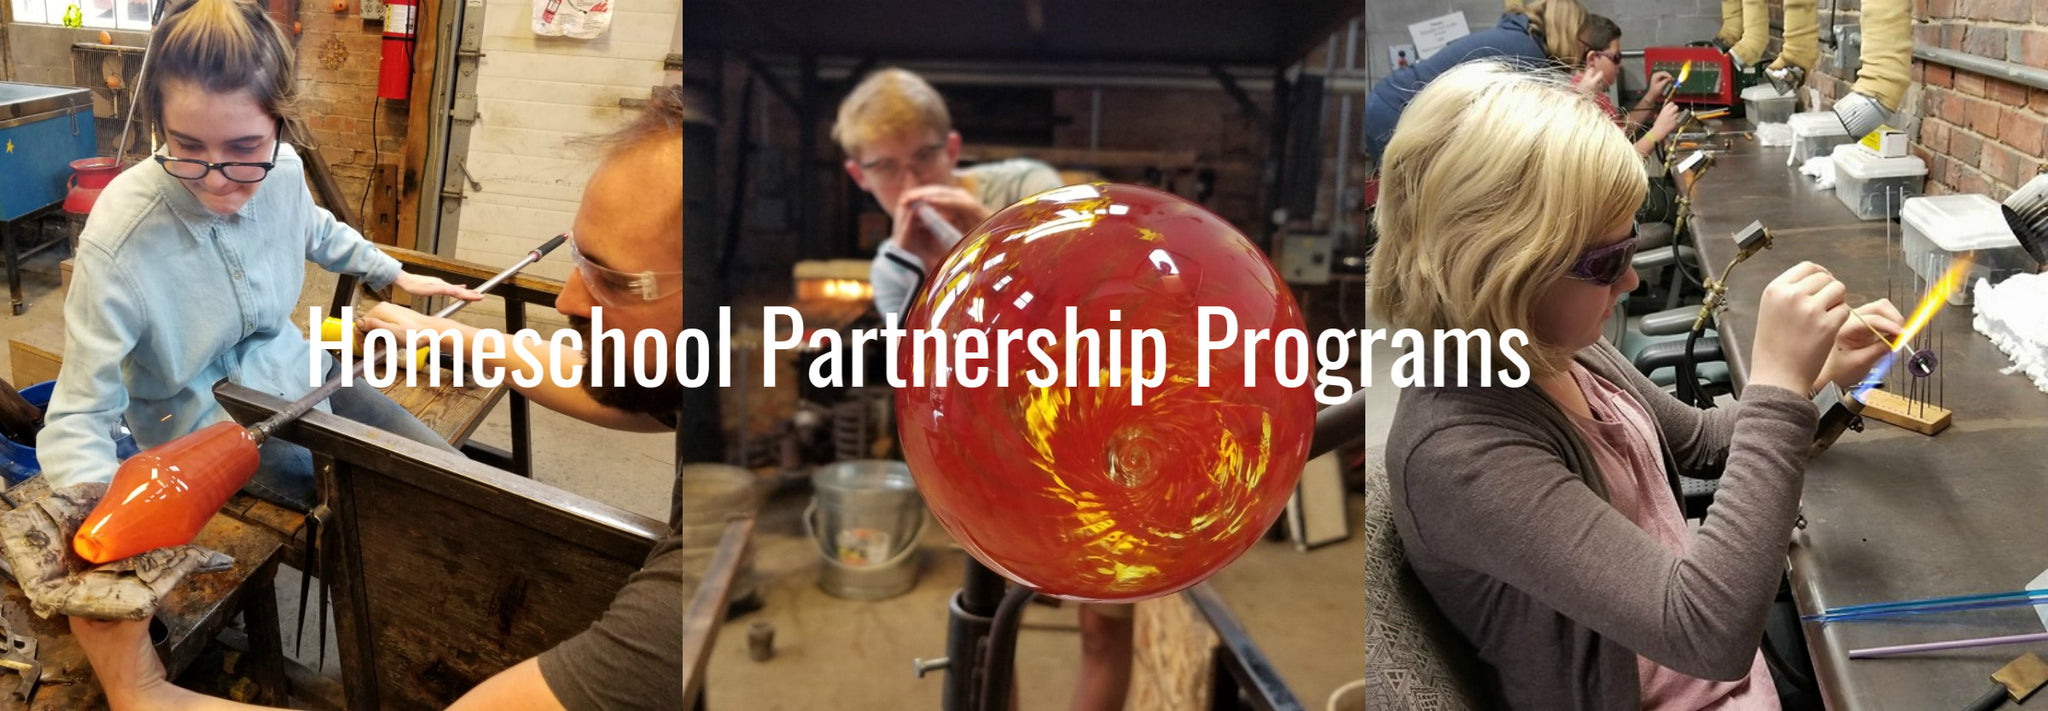 Homeschool Partnership Program